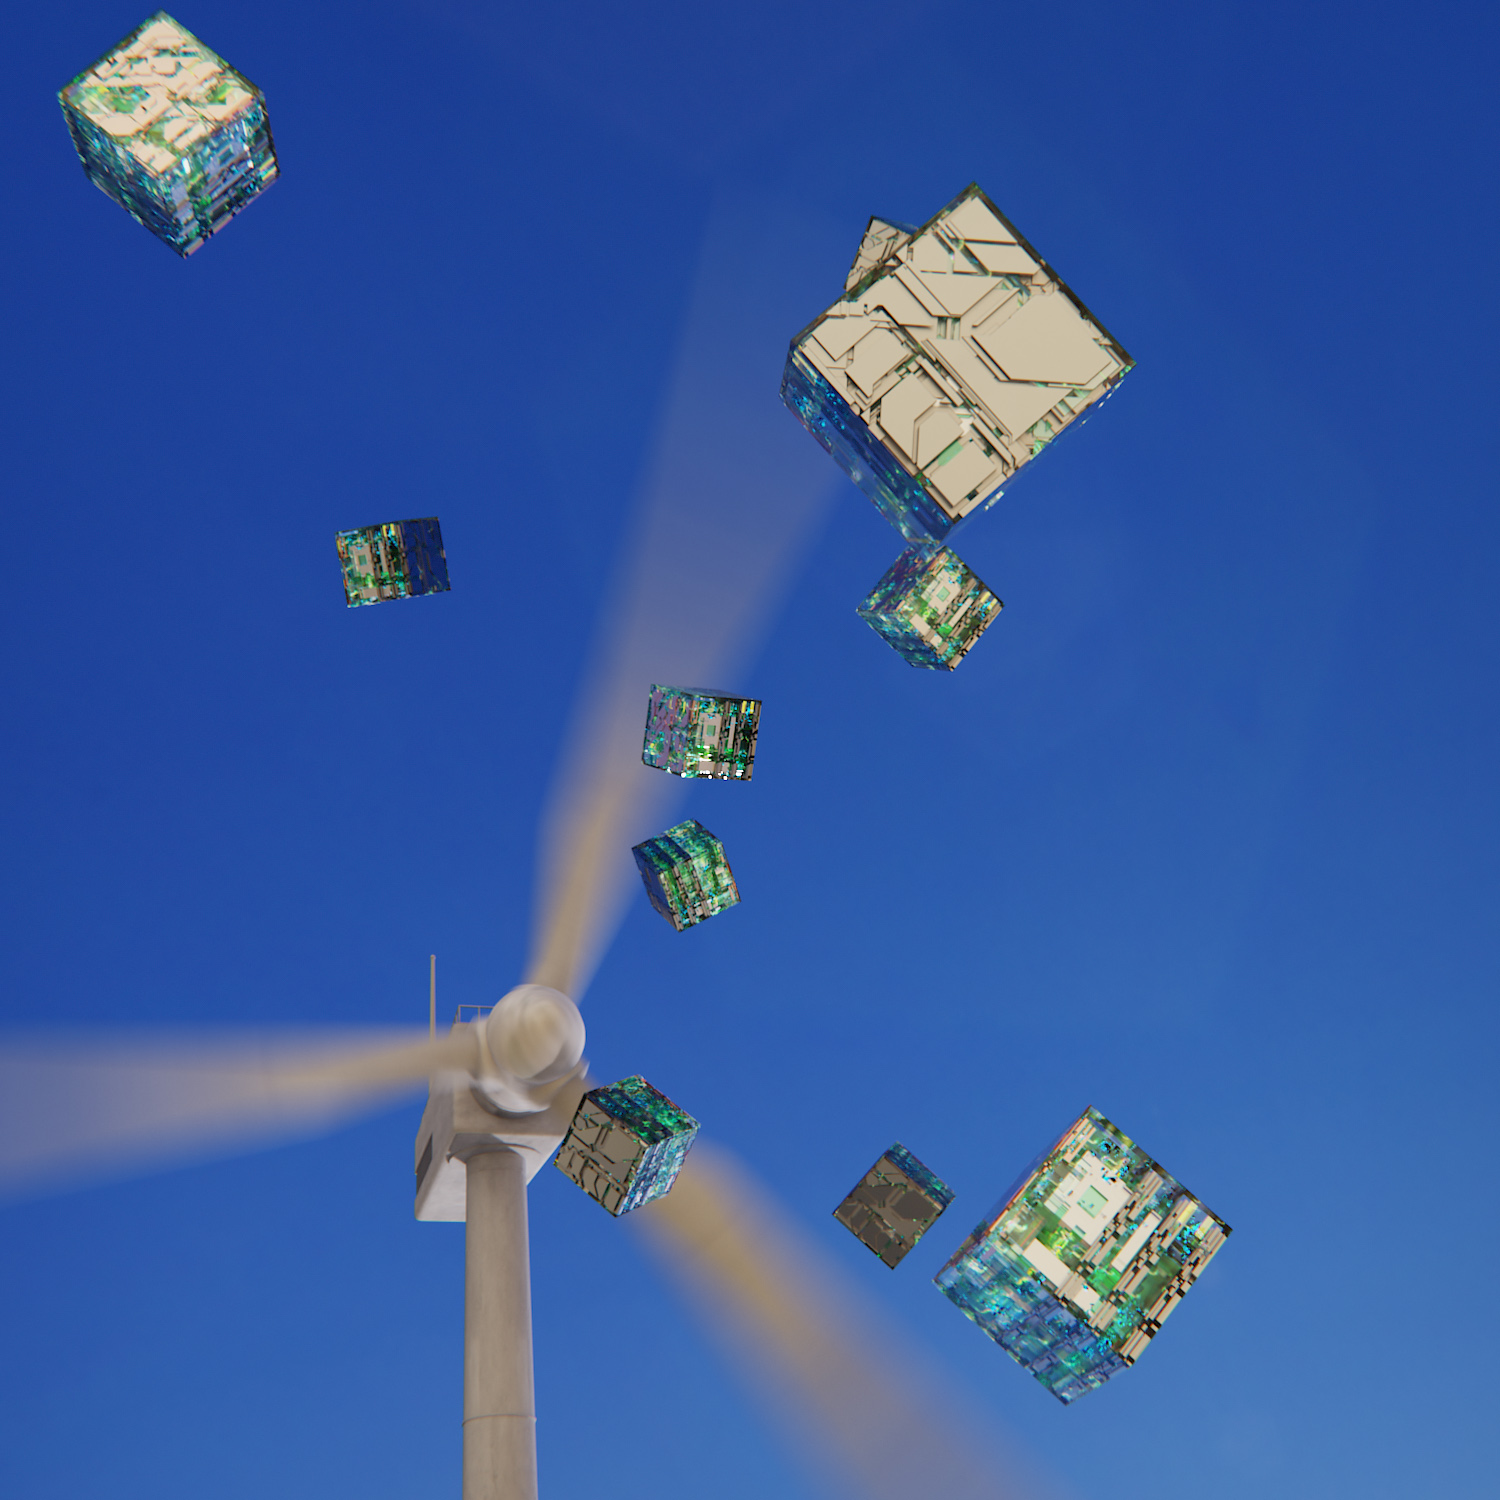 Wind turbine spinning and computer chip blocks flying around